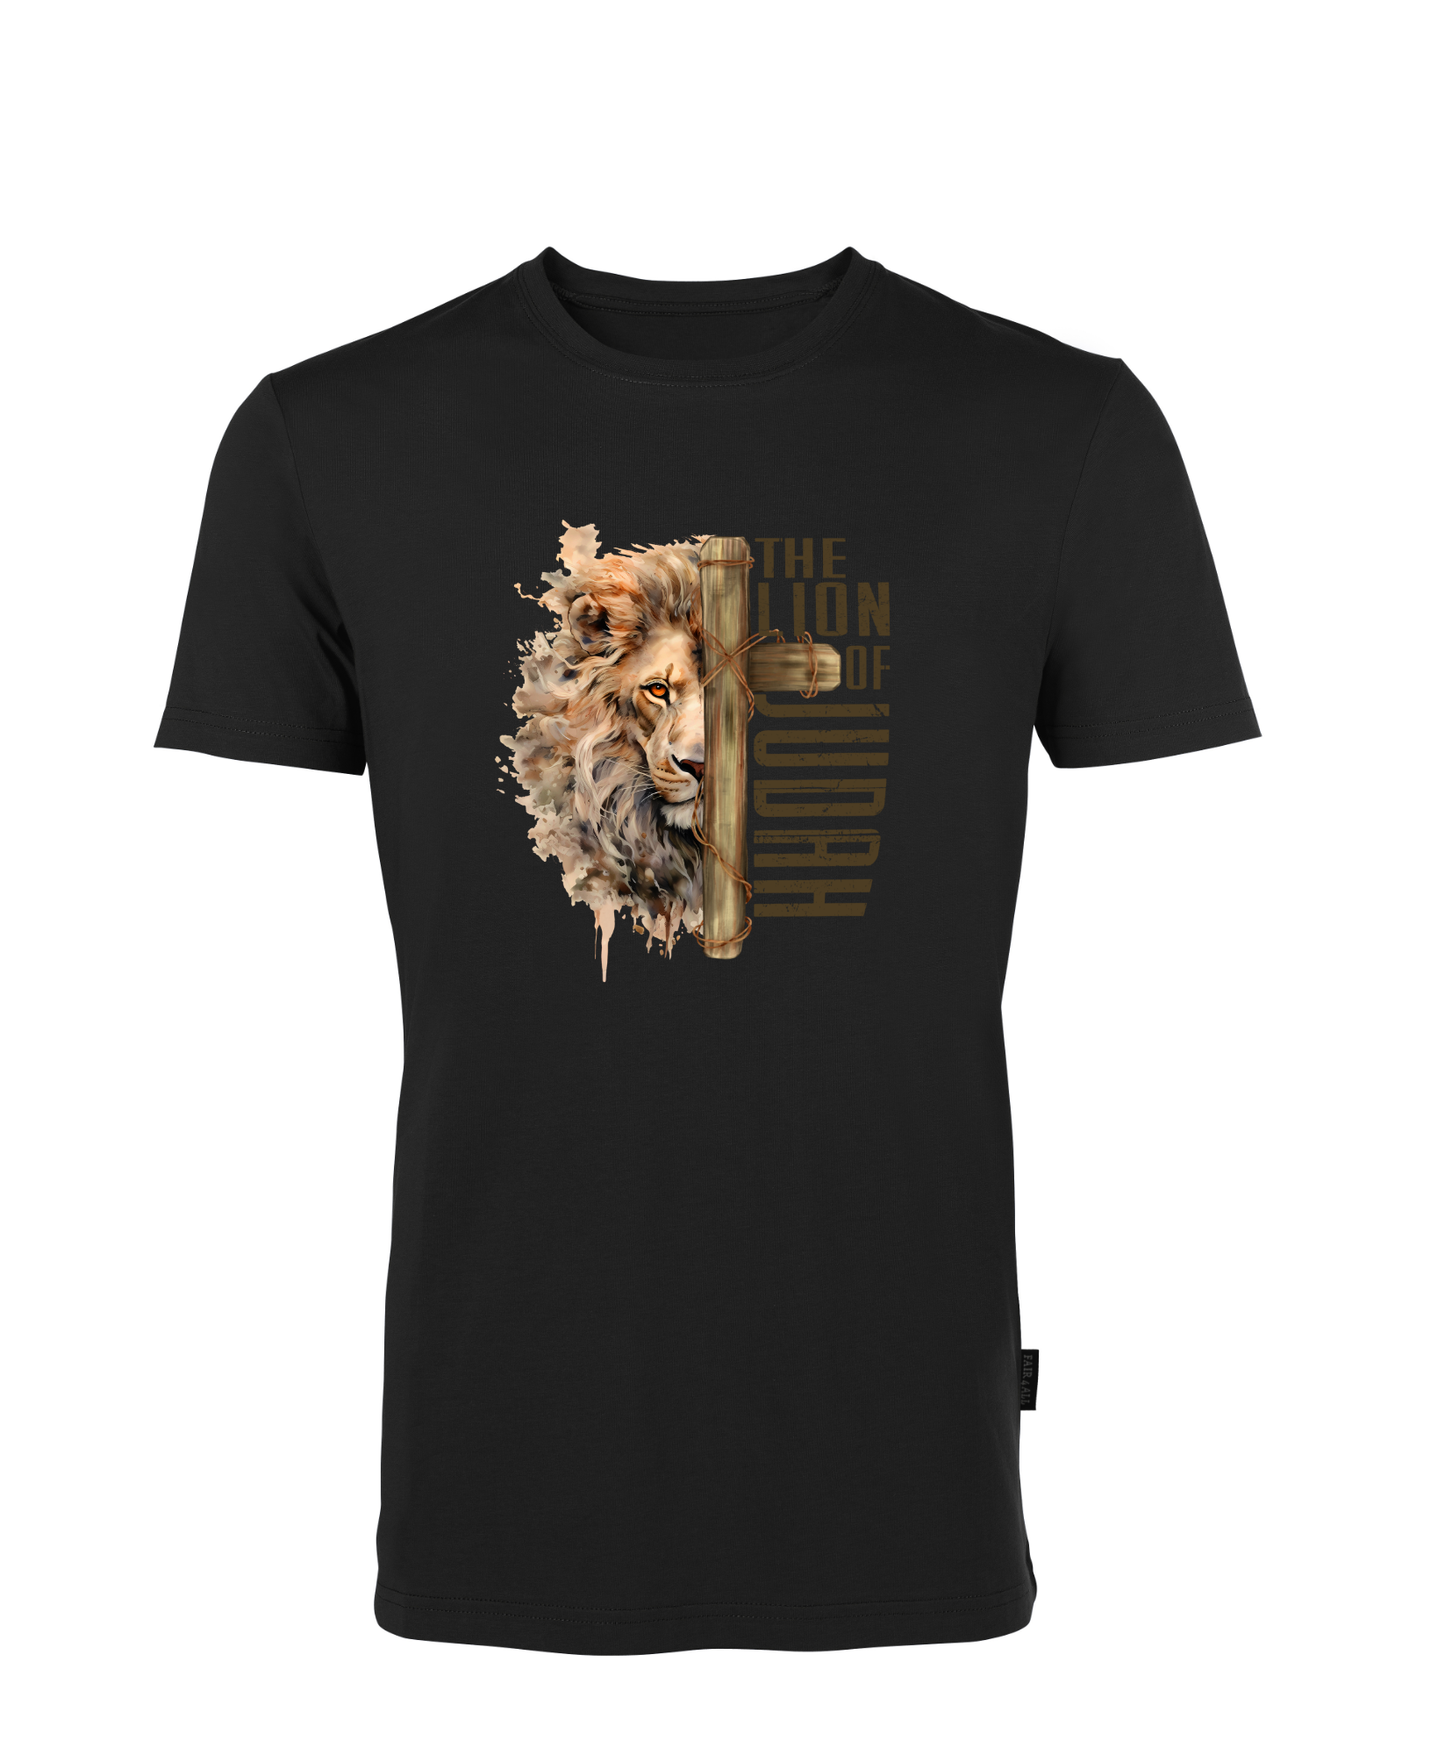 The Lion of Judah - T-Shirt Unisex - großer Aufdruck